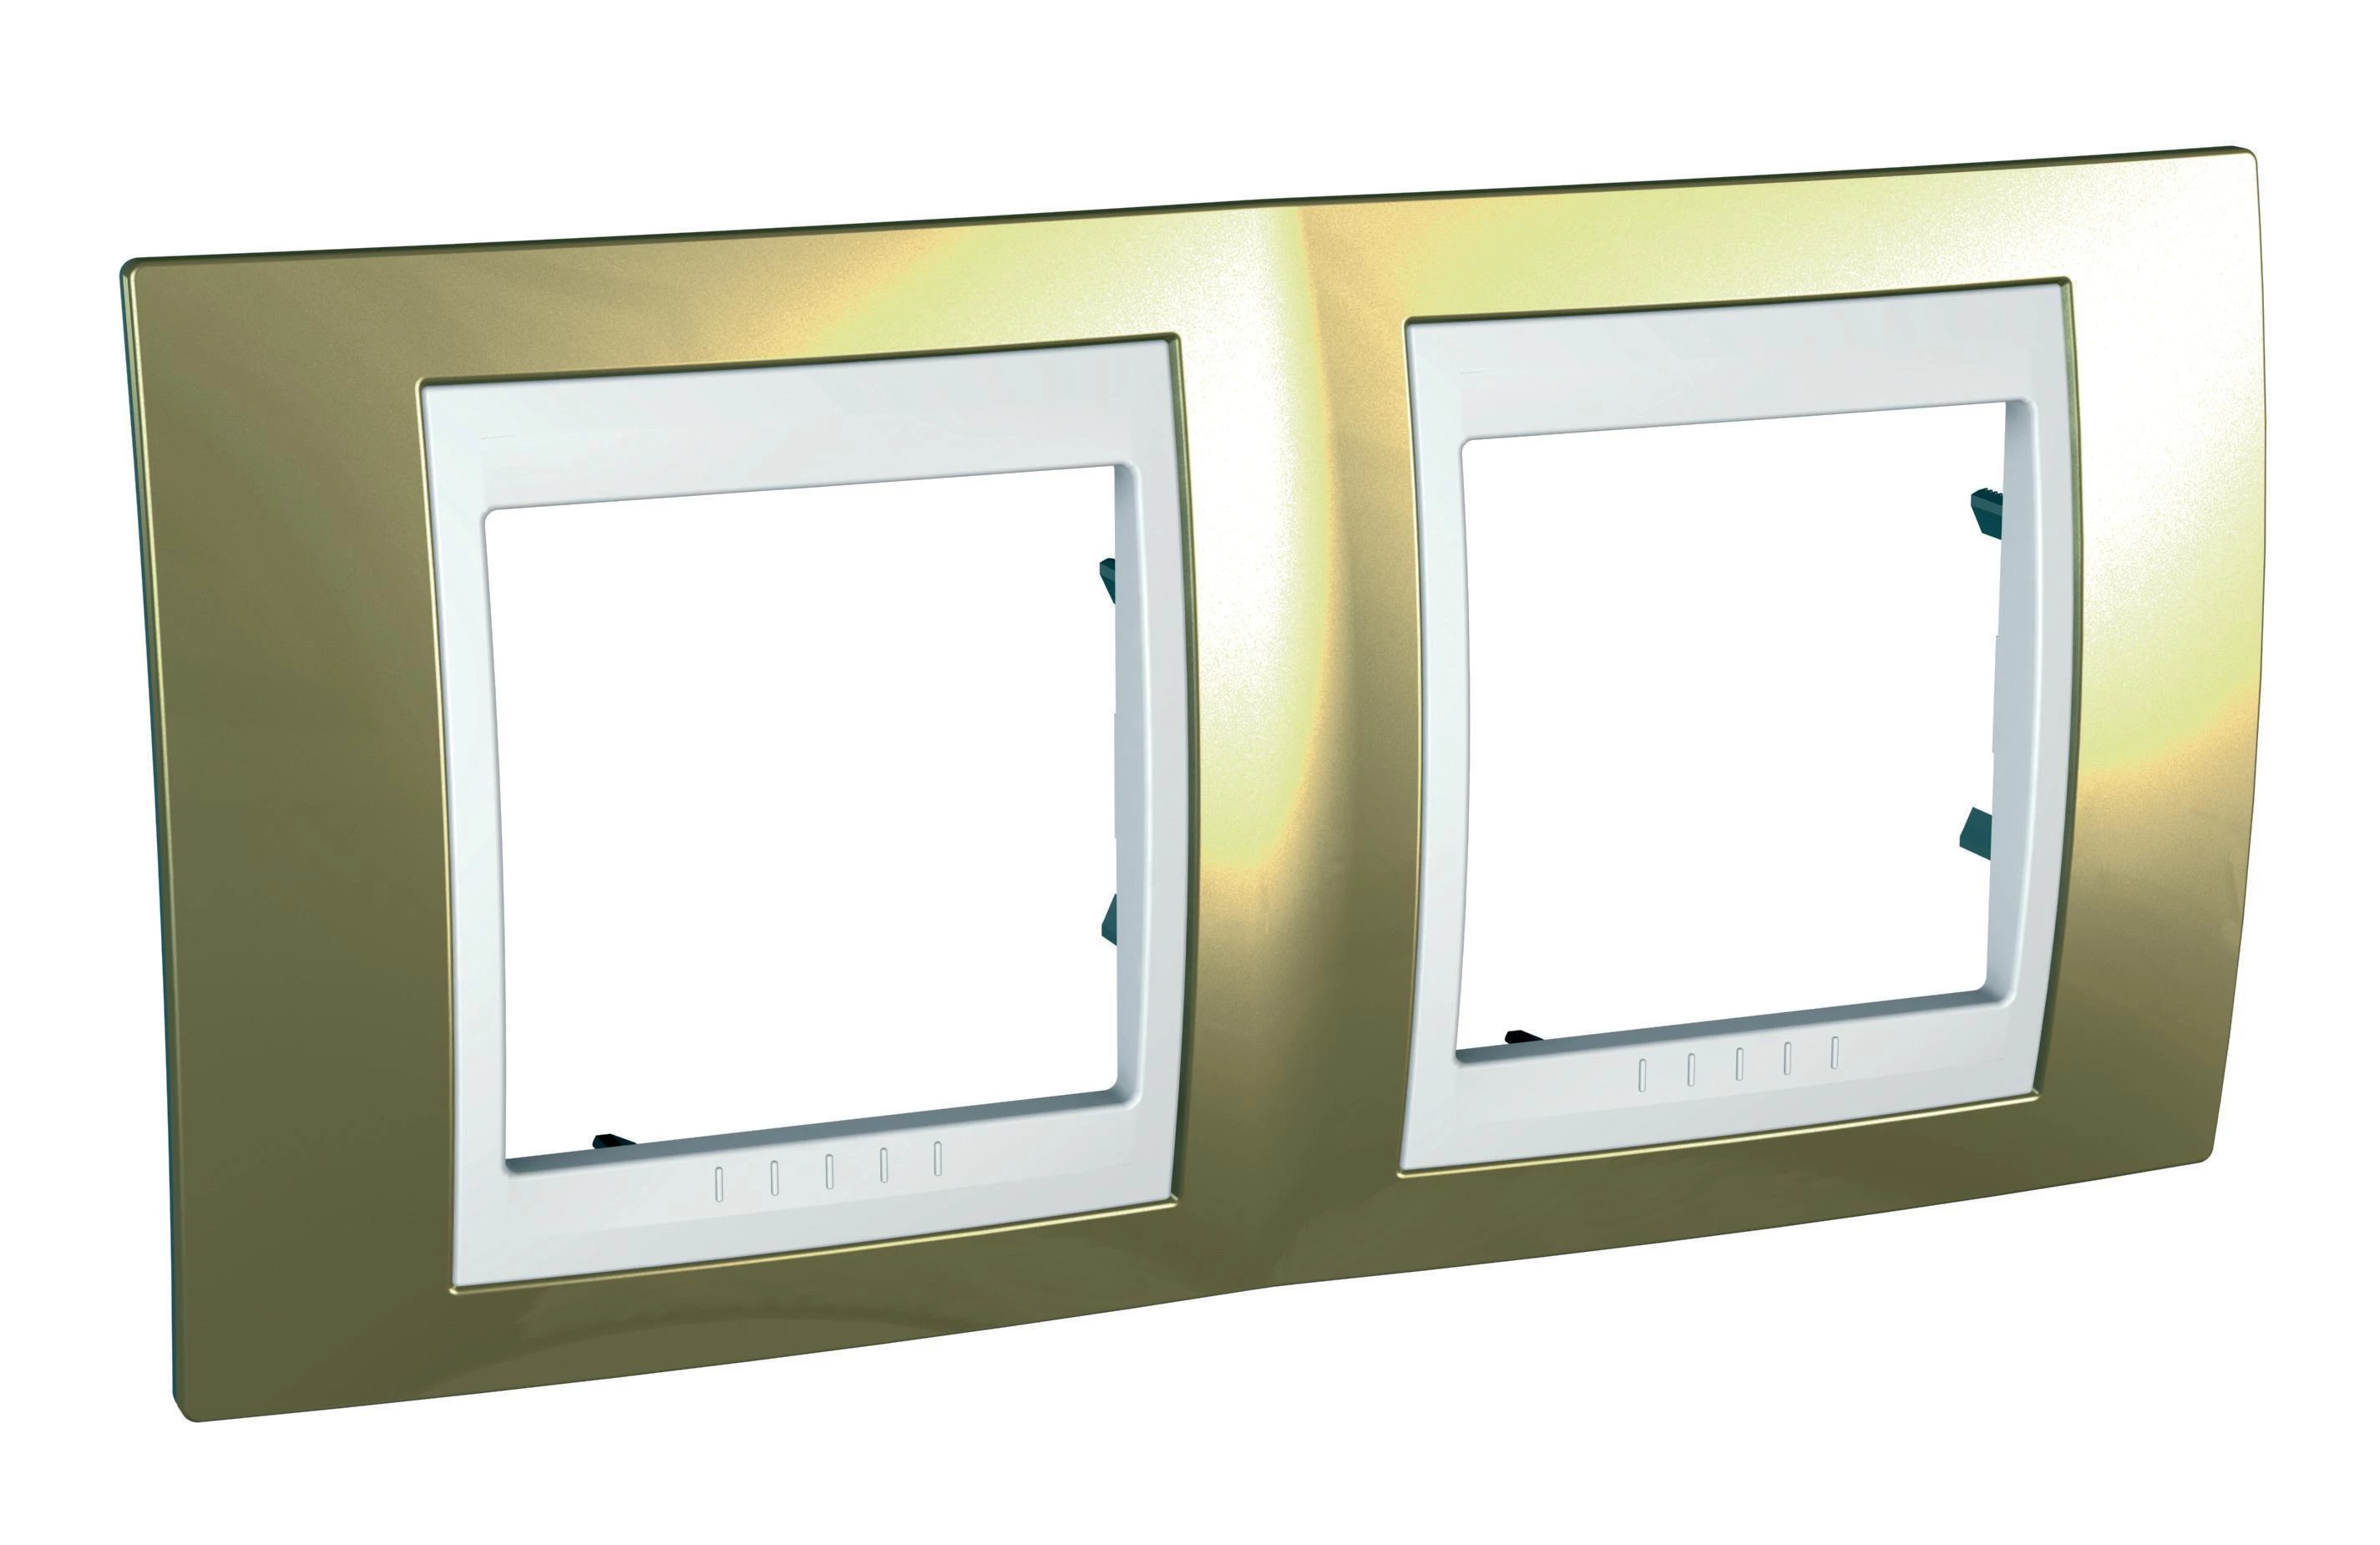  артикул MGU66.004.804 название Рамка 2-ая (двойная) , Золото/Белый (пластик), серия Unica, Schneider Electric